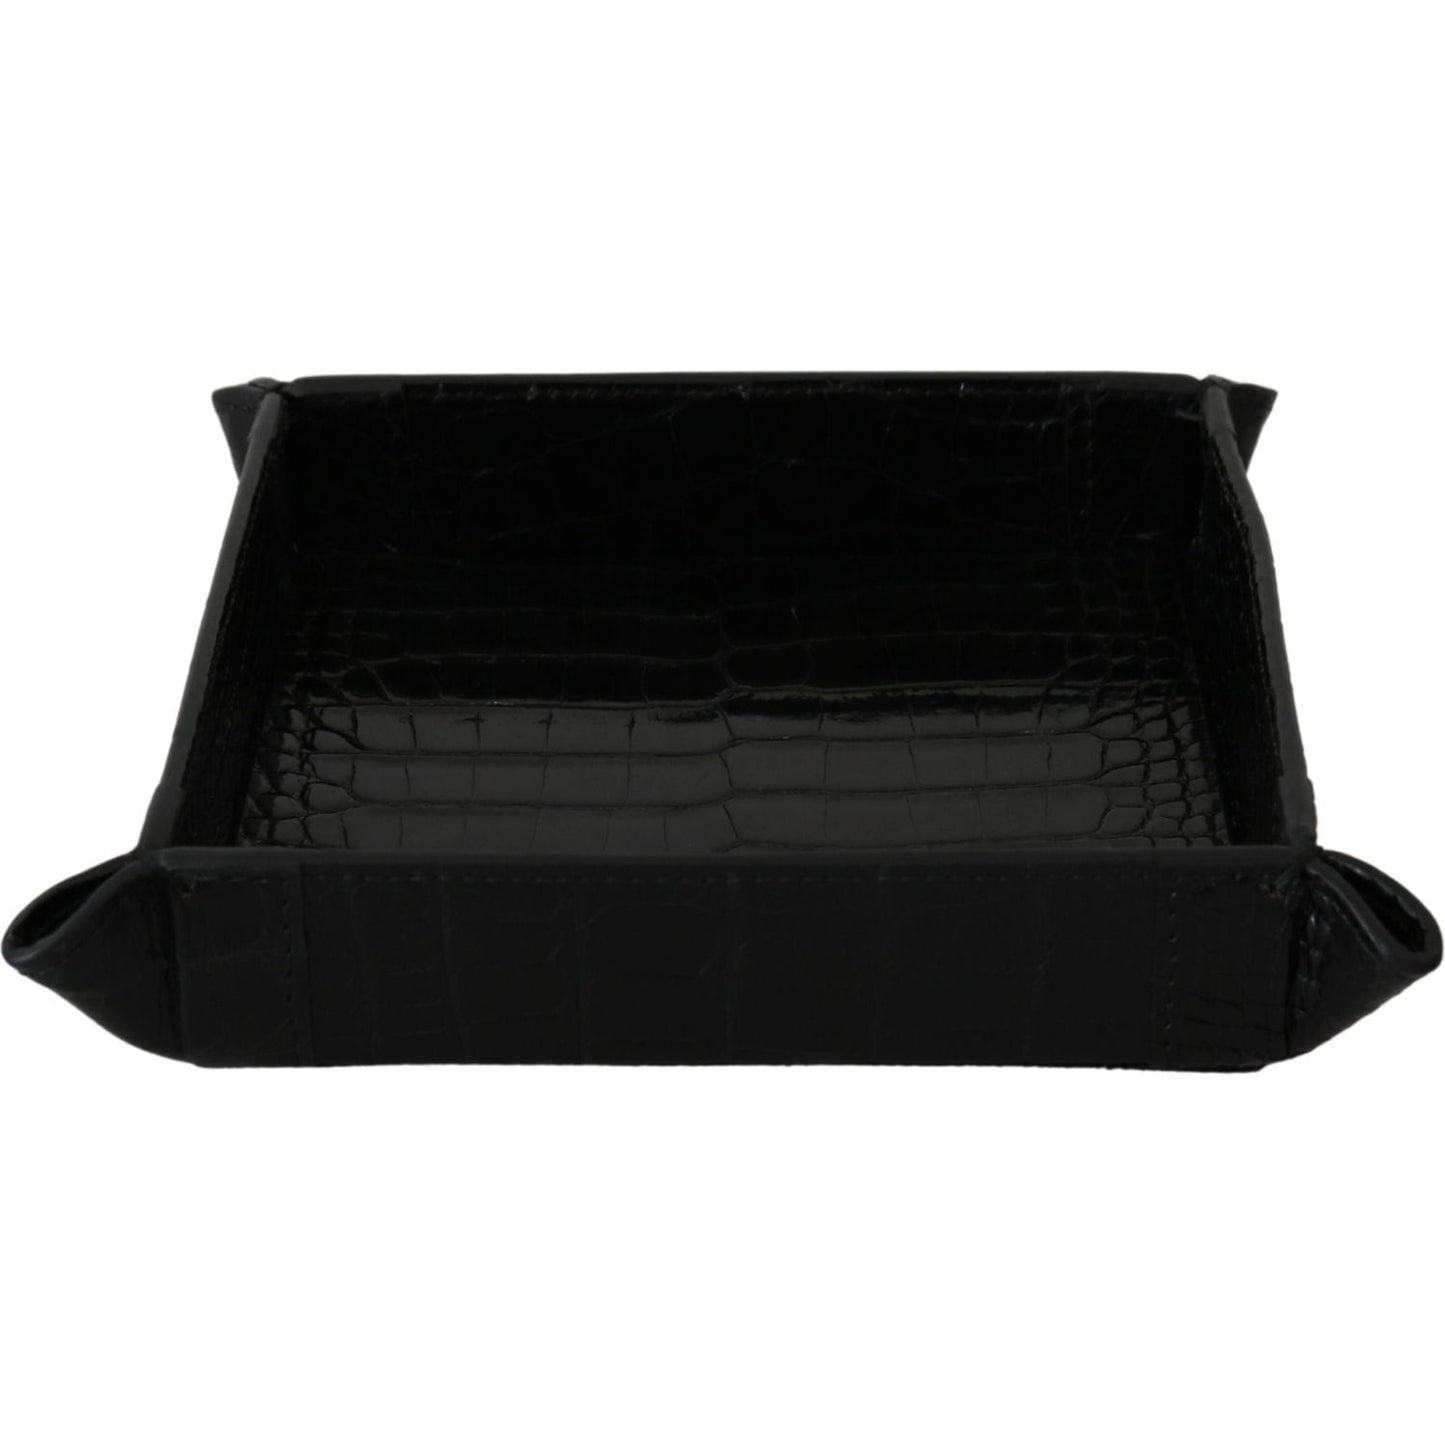 Dolce & Gabbana Elegant Black Exotic Skin Entry Tray plate-key-wallet-phone-card-money-patterned-skin-tray